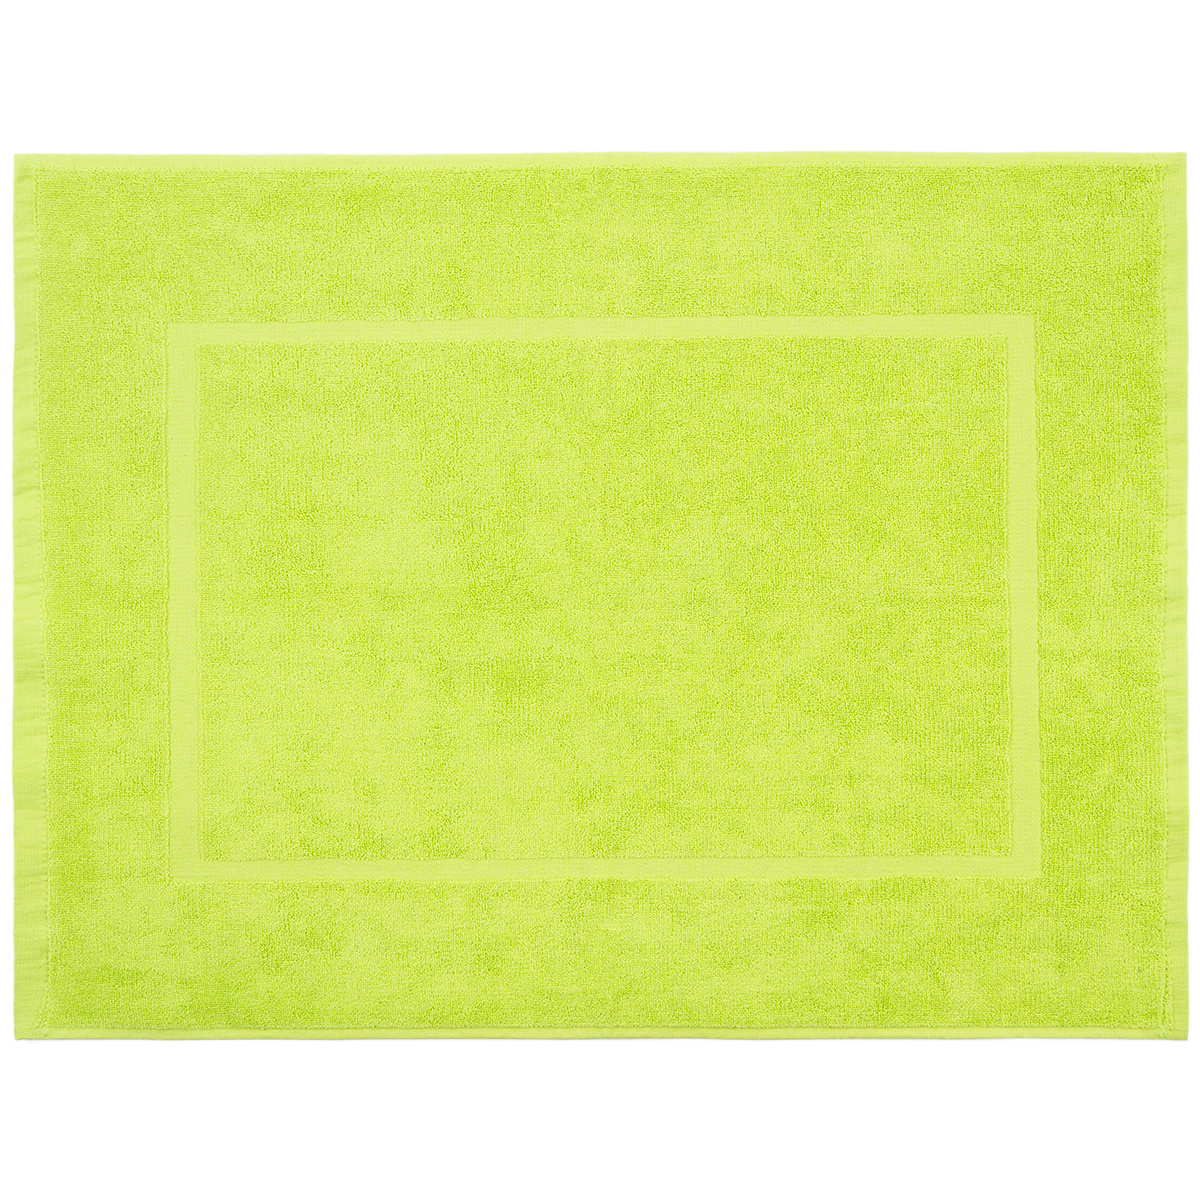 Kúpeľňová predložka Comfort zelená, 50 x 70 cm